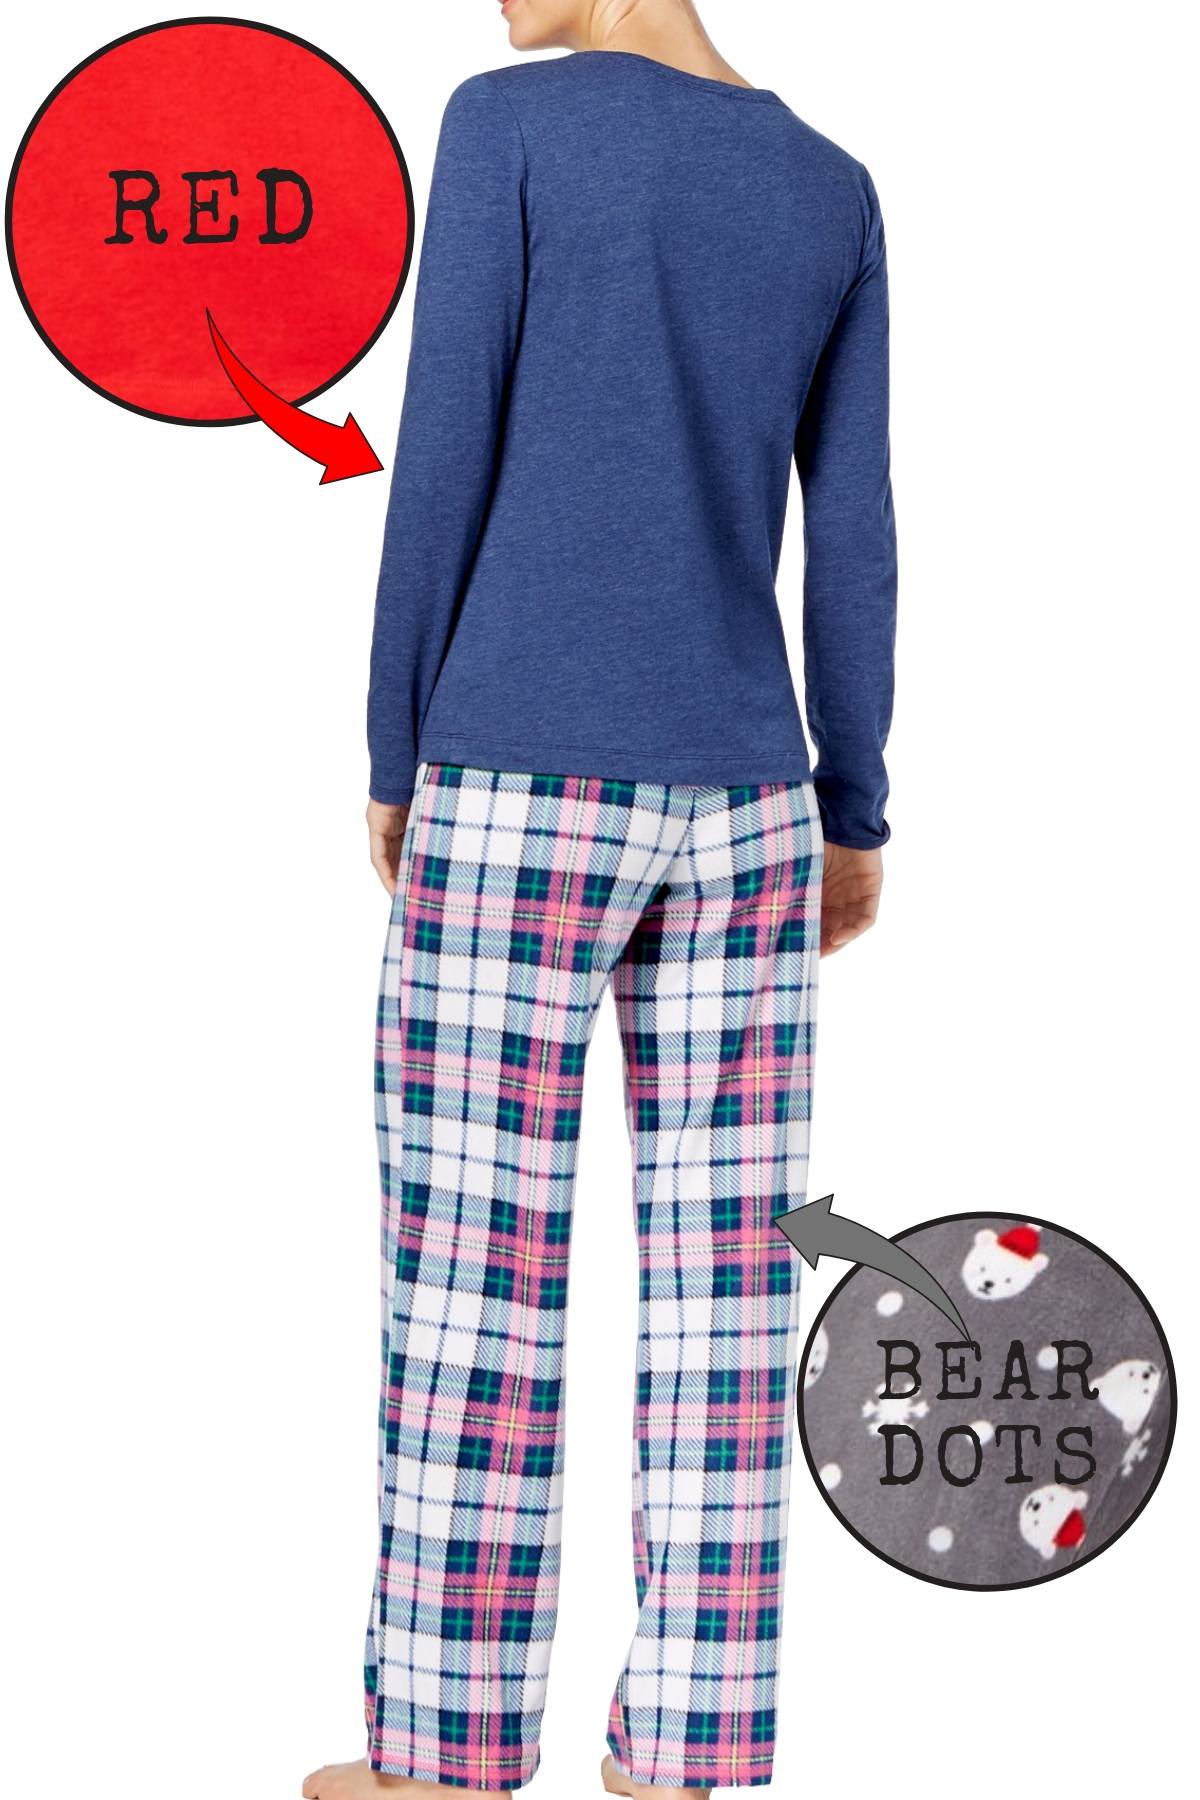 Jenni by Jennifer Moore Red Bear-Dots Printed Top and Fleece Pant PJ Set